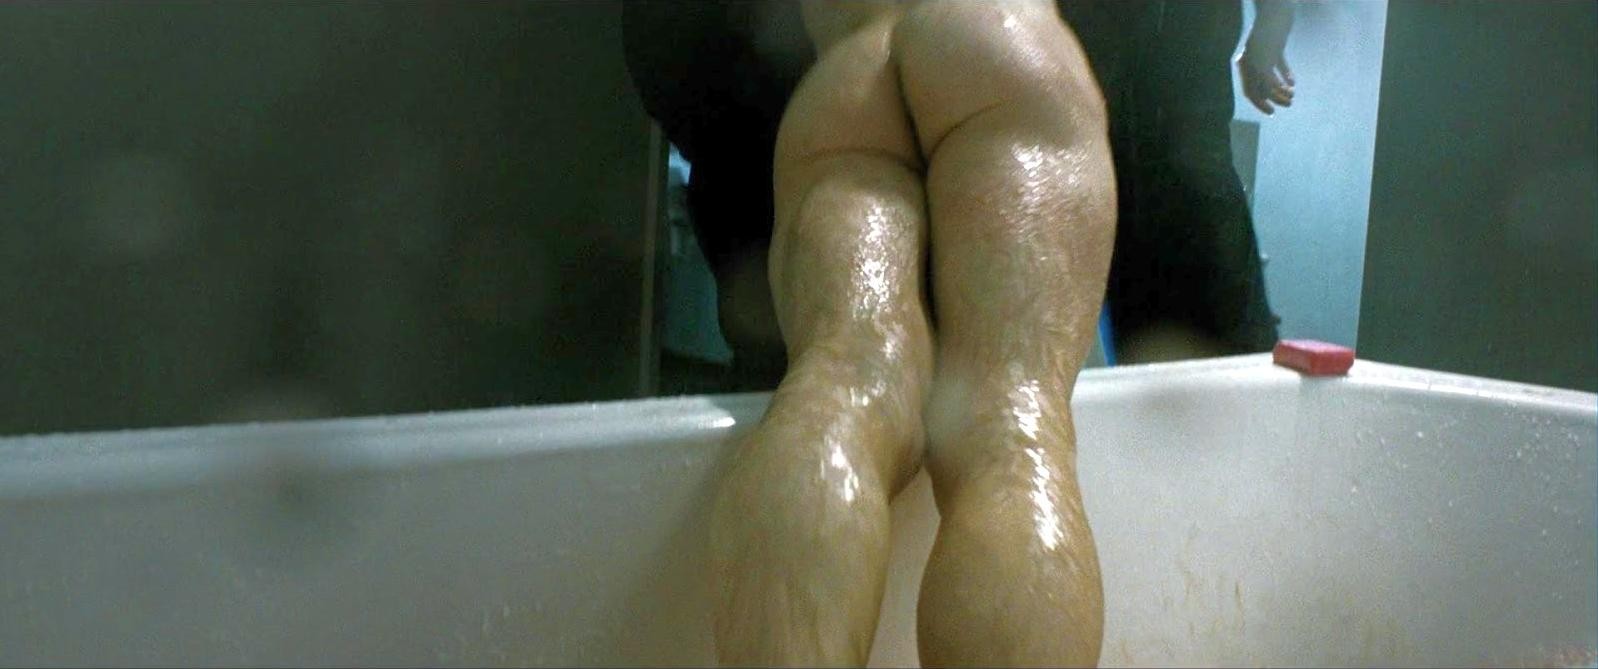 Michael Fassbender nudo in "Hunger" (2008) .